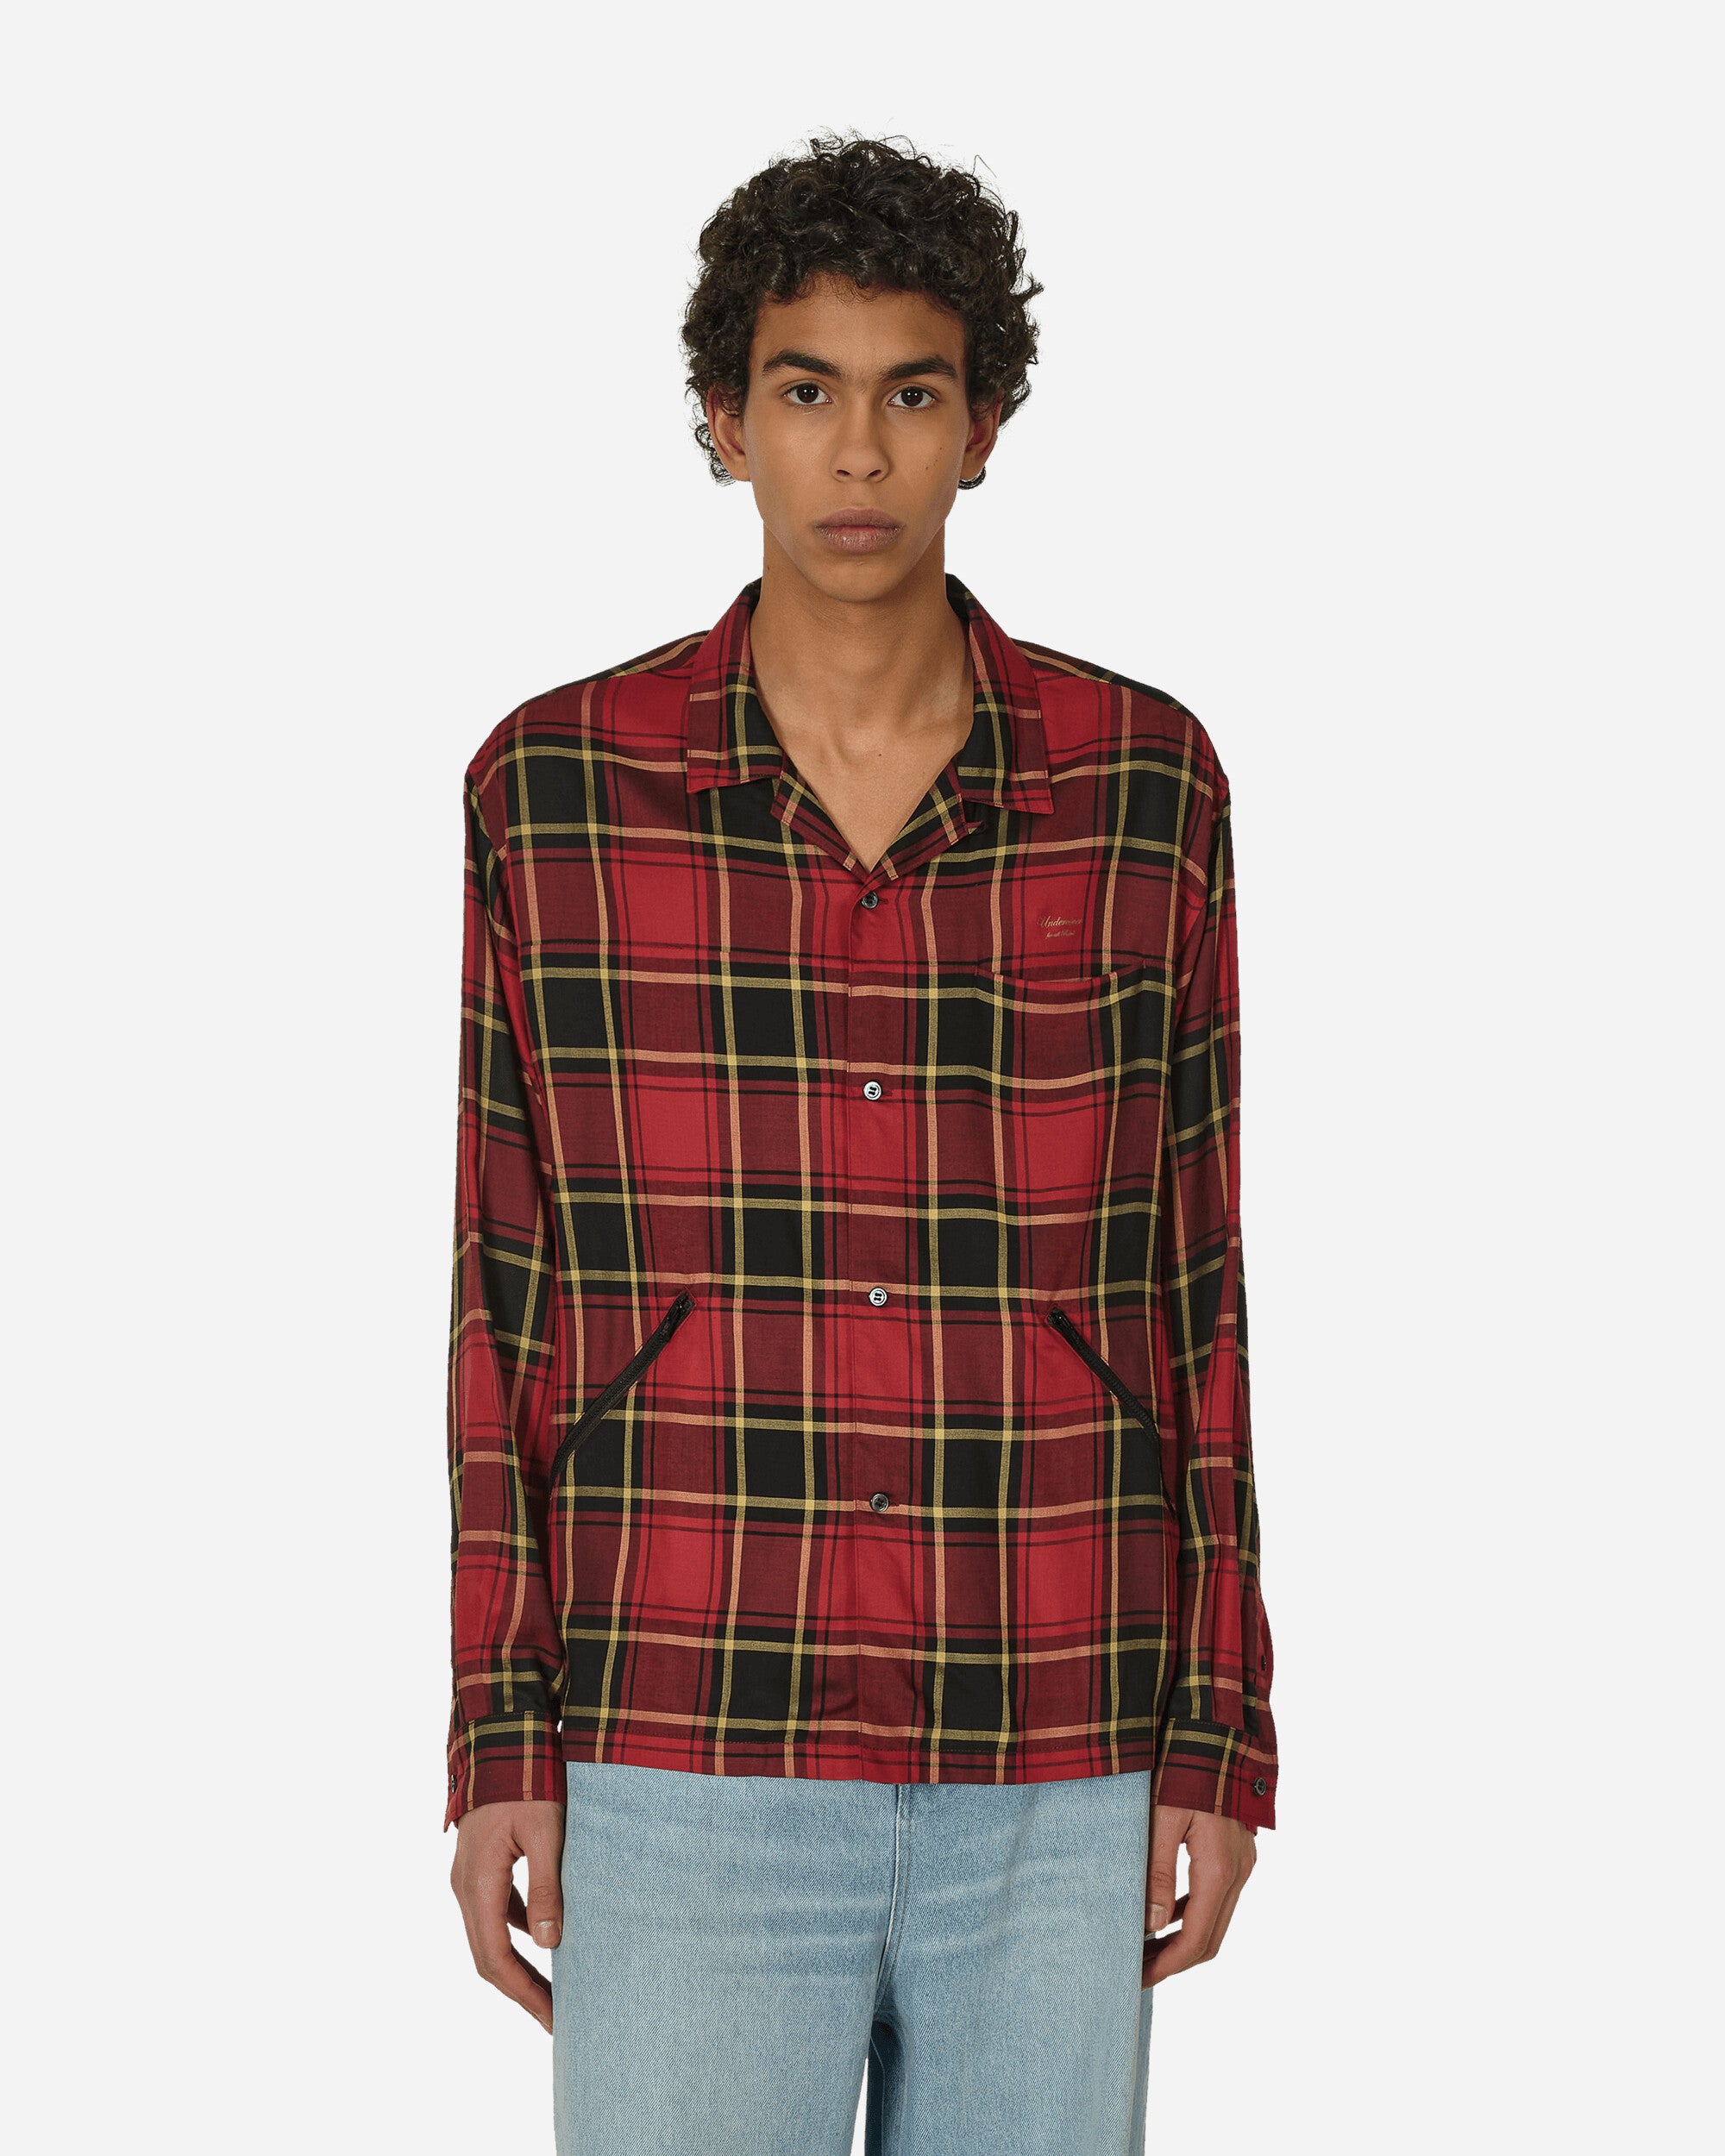 Undercover Checkered Shirt Red Check Shirts Longsleeve Shirt UP1D4401-1 1